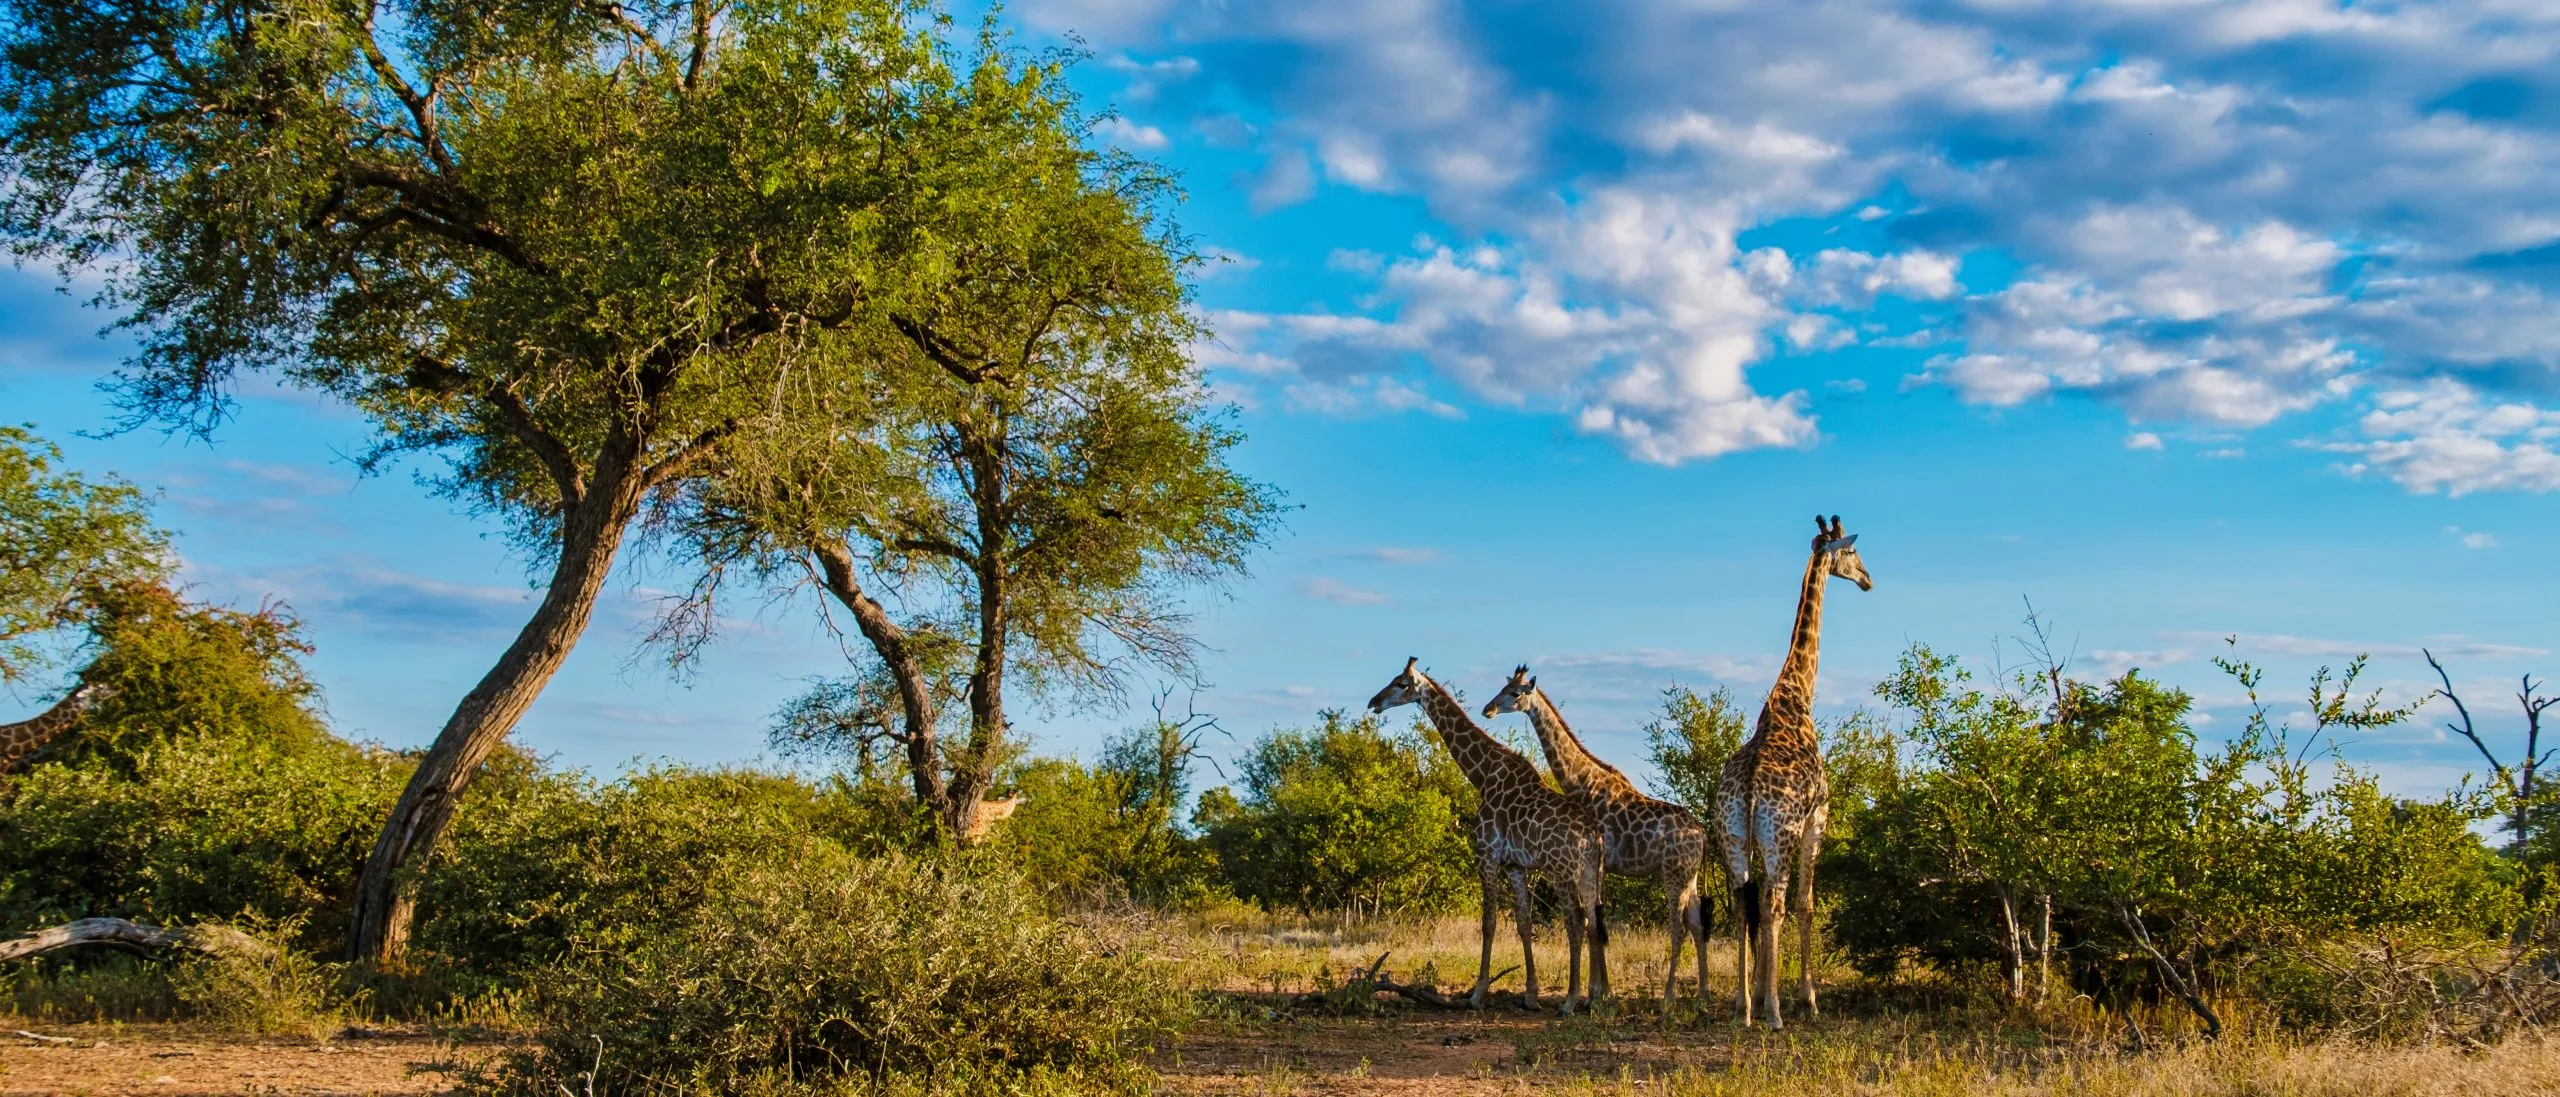 Giraffe in de bush van Kruger nationaal park Zuid-Afrika. Giraffe bij zonsopgang in Krugerpark Zuid-Afrika